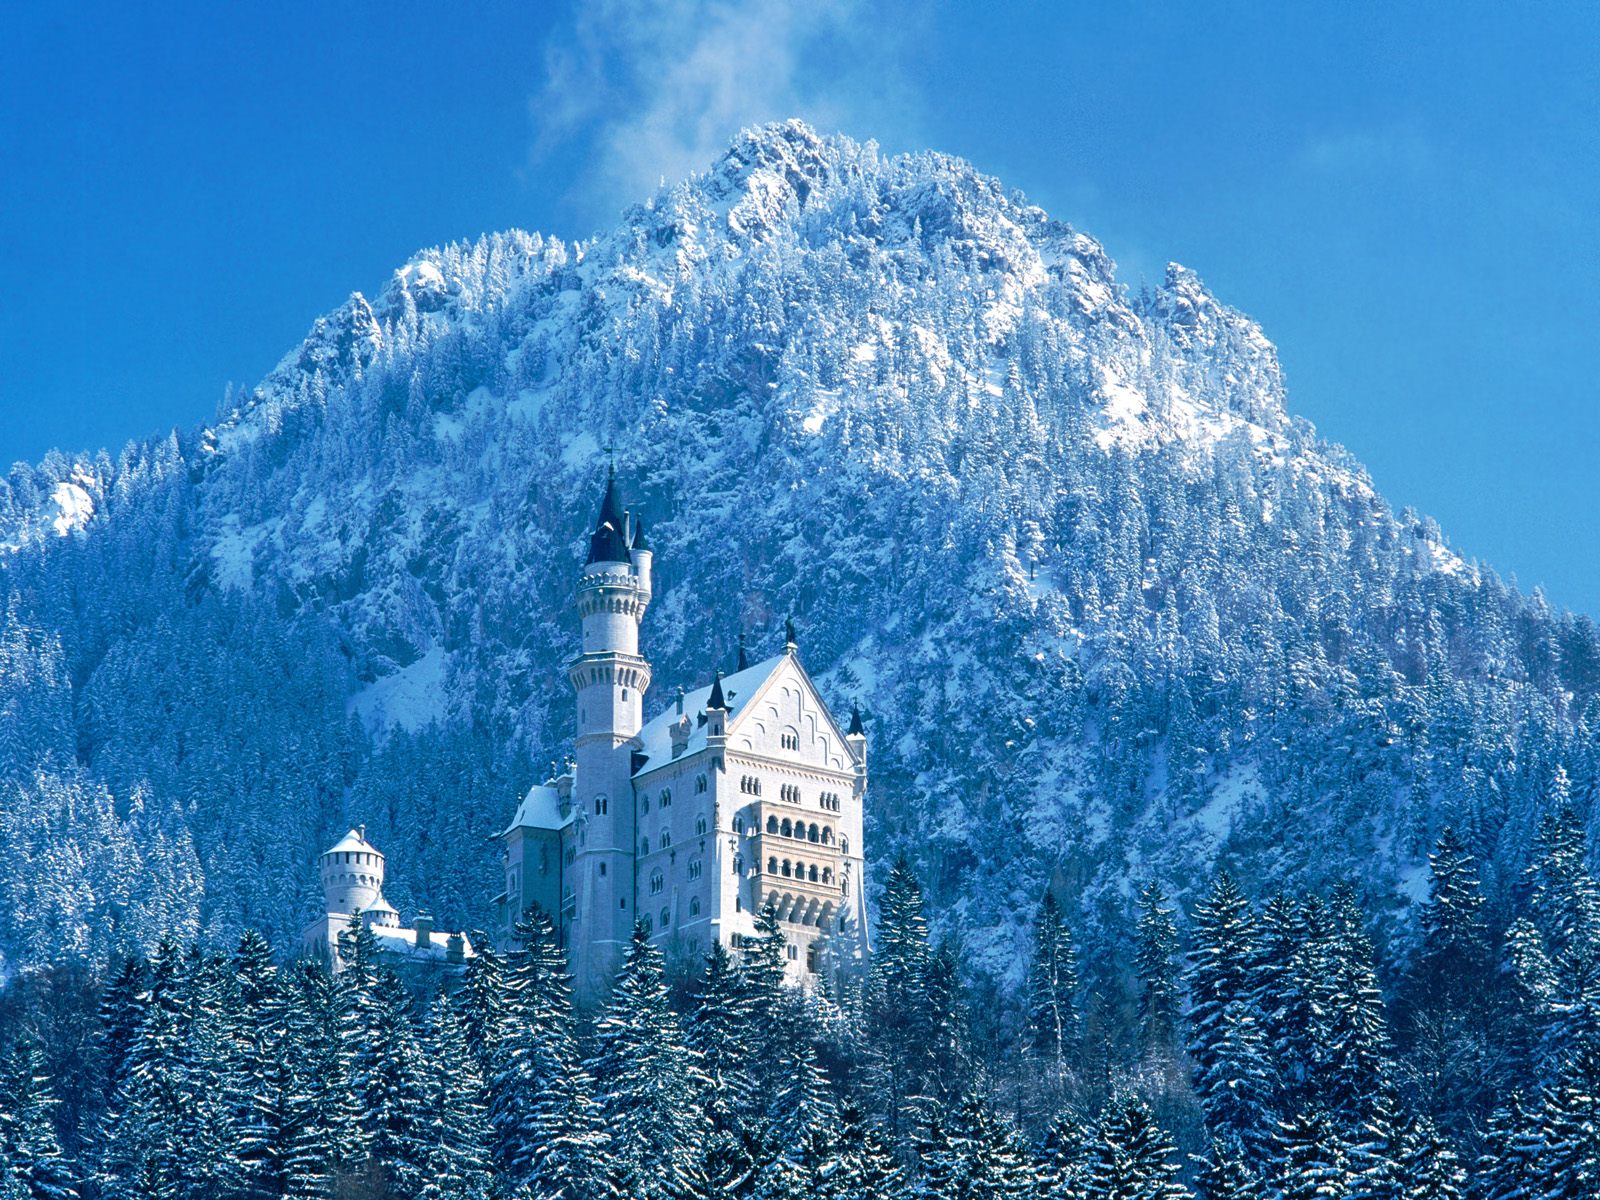 Neuschwanstein Castle Bavaria Germany - snow photo or wallpaper